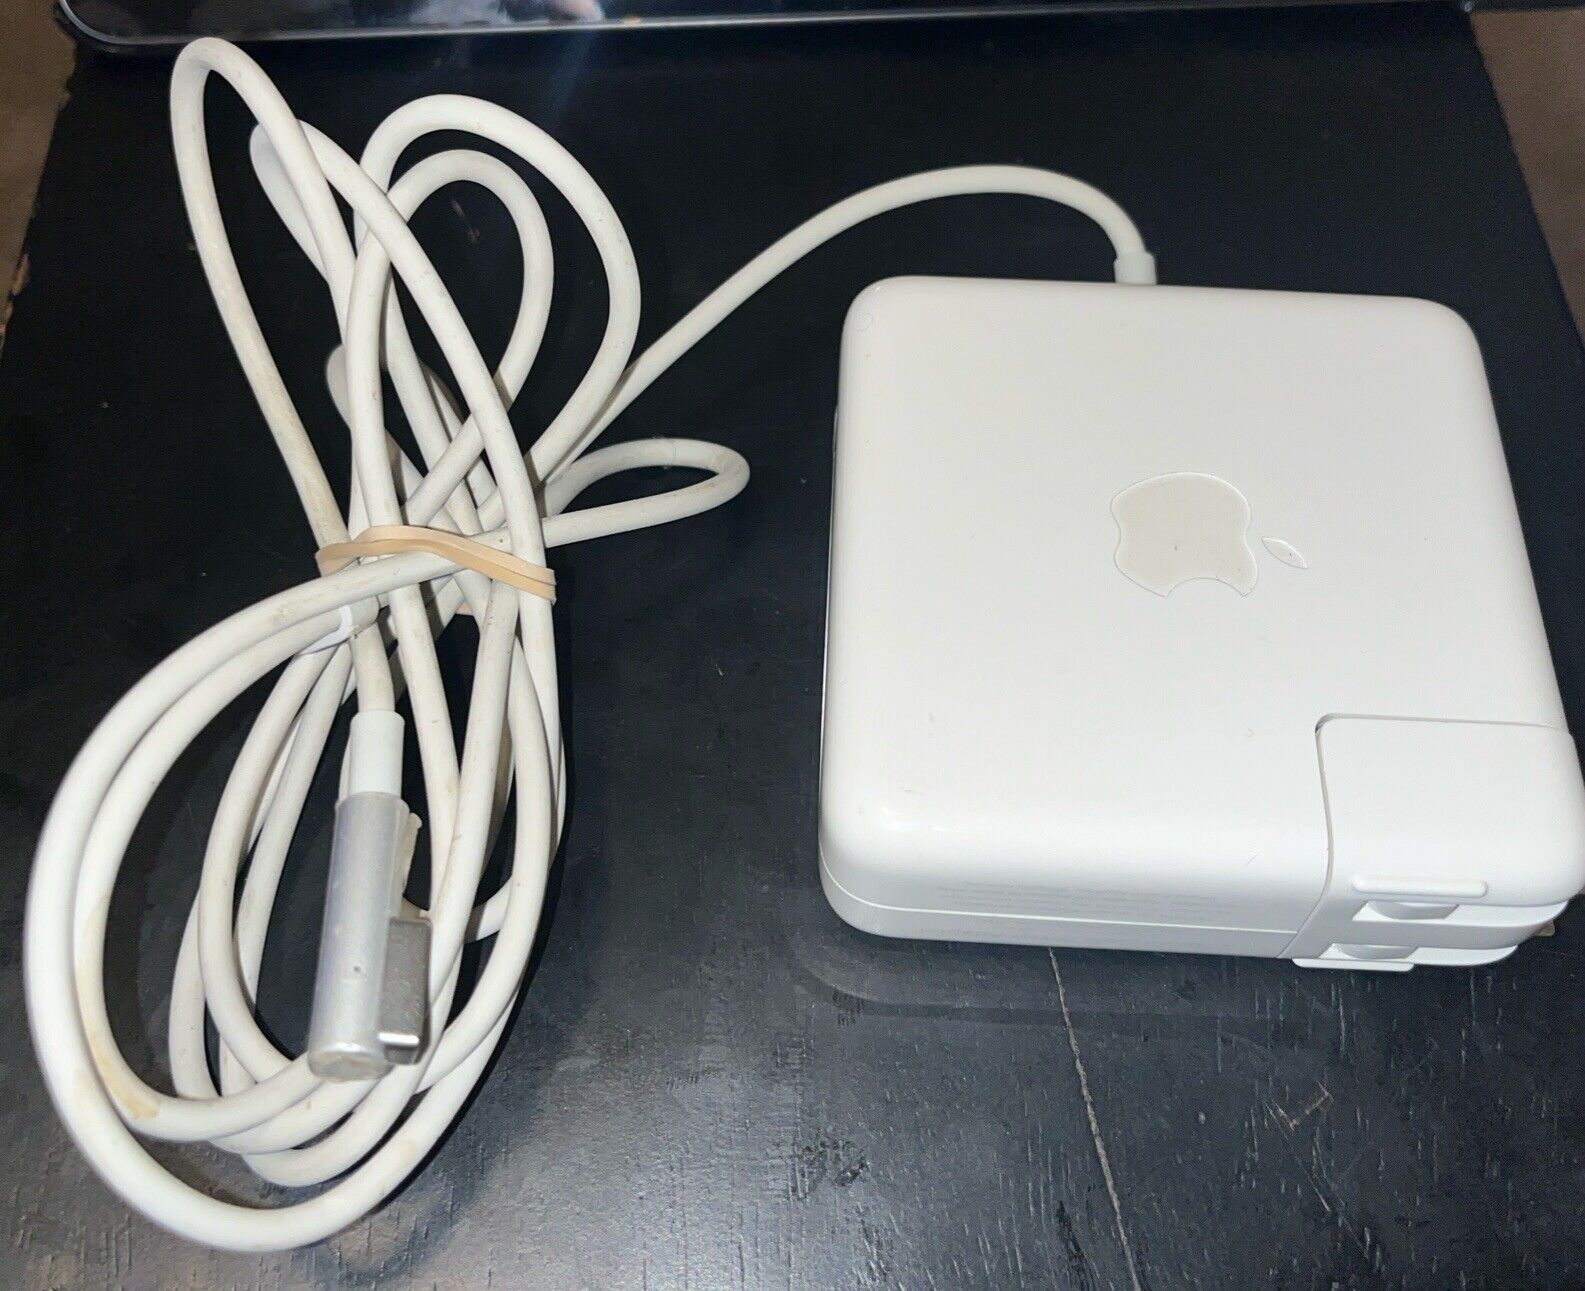 MacBook Pro 85W L-Tip MagSafe Power Adapter Charger 85 Watt MS1 Apple A1343 